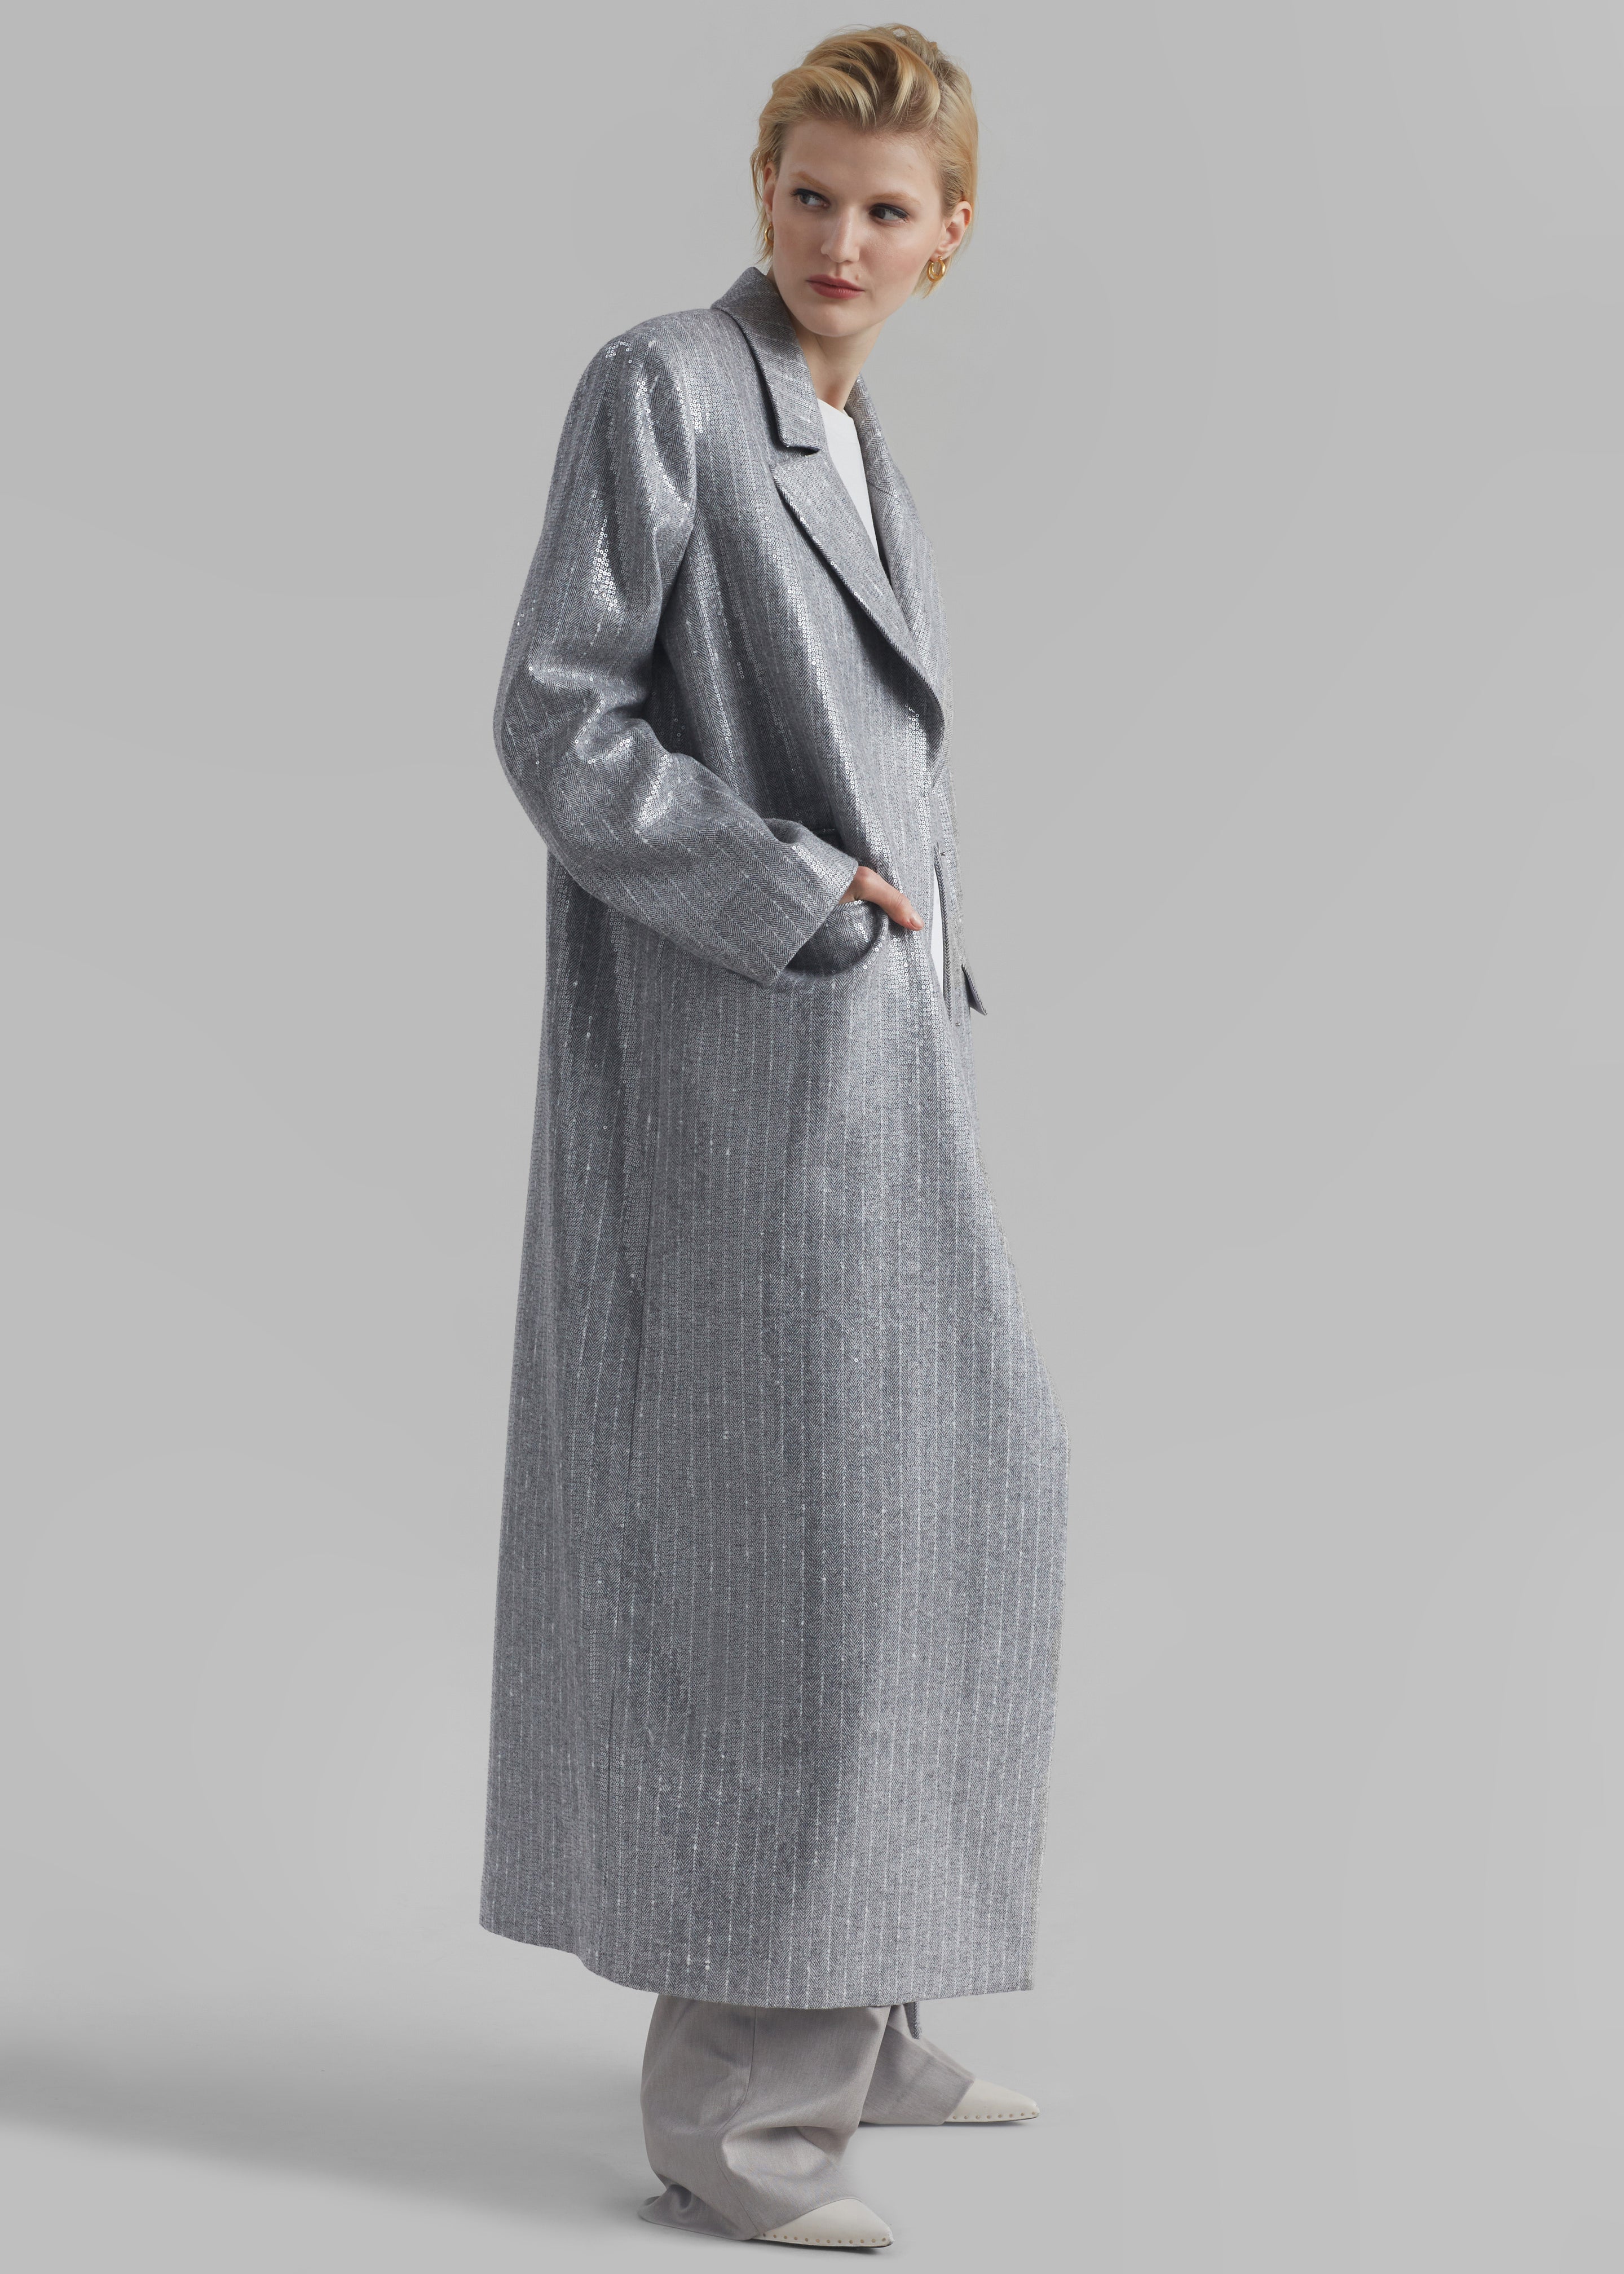 Jennifer Sequins Coat - Grey/White Stripe - 7